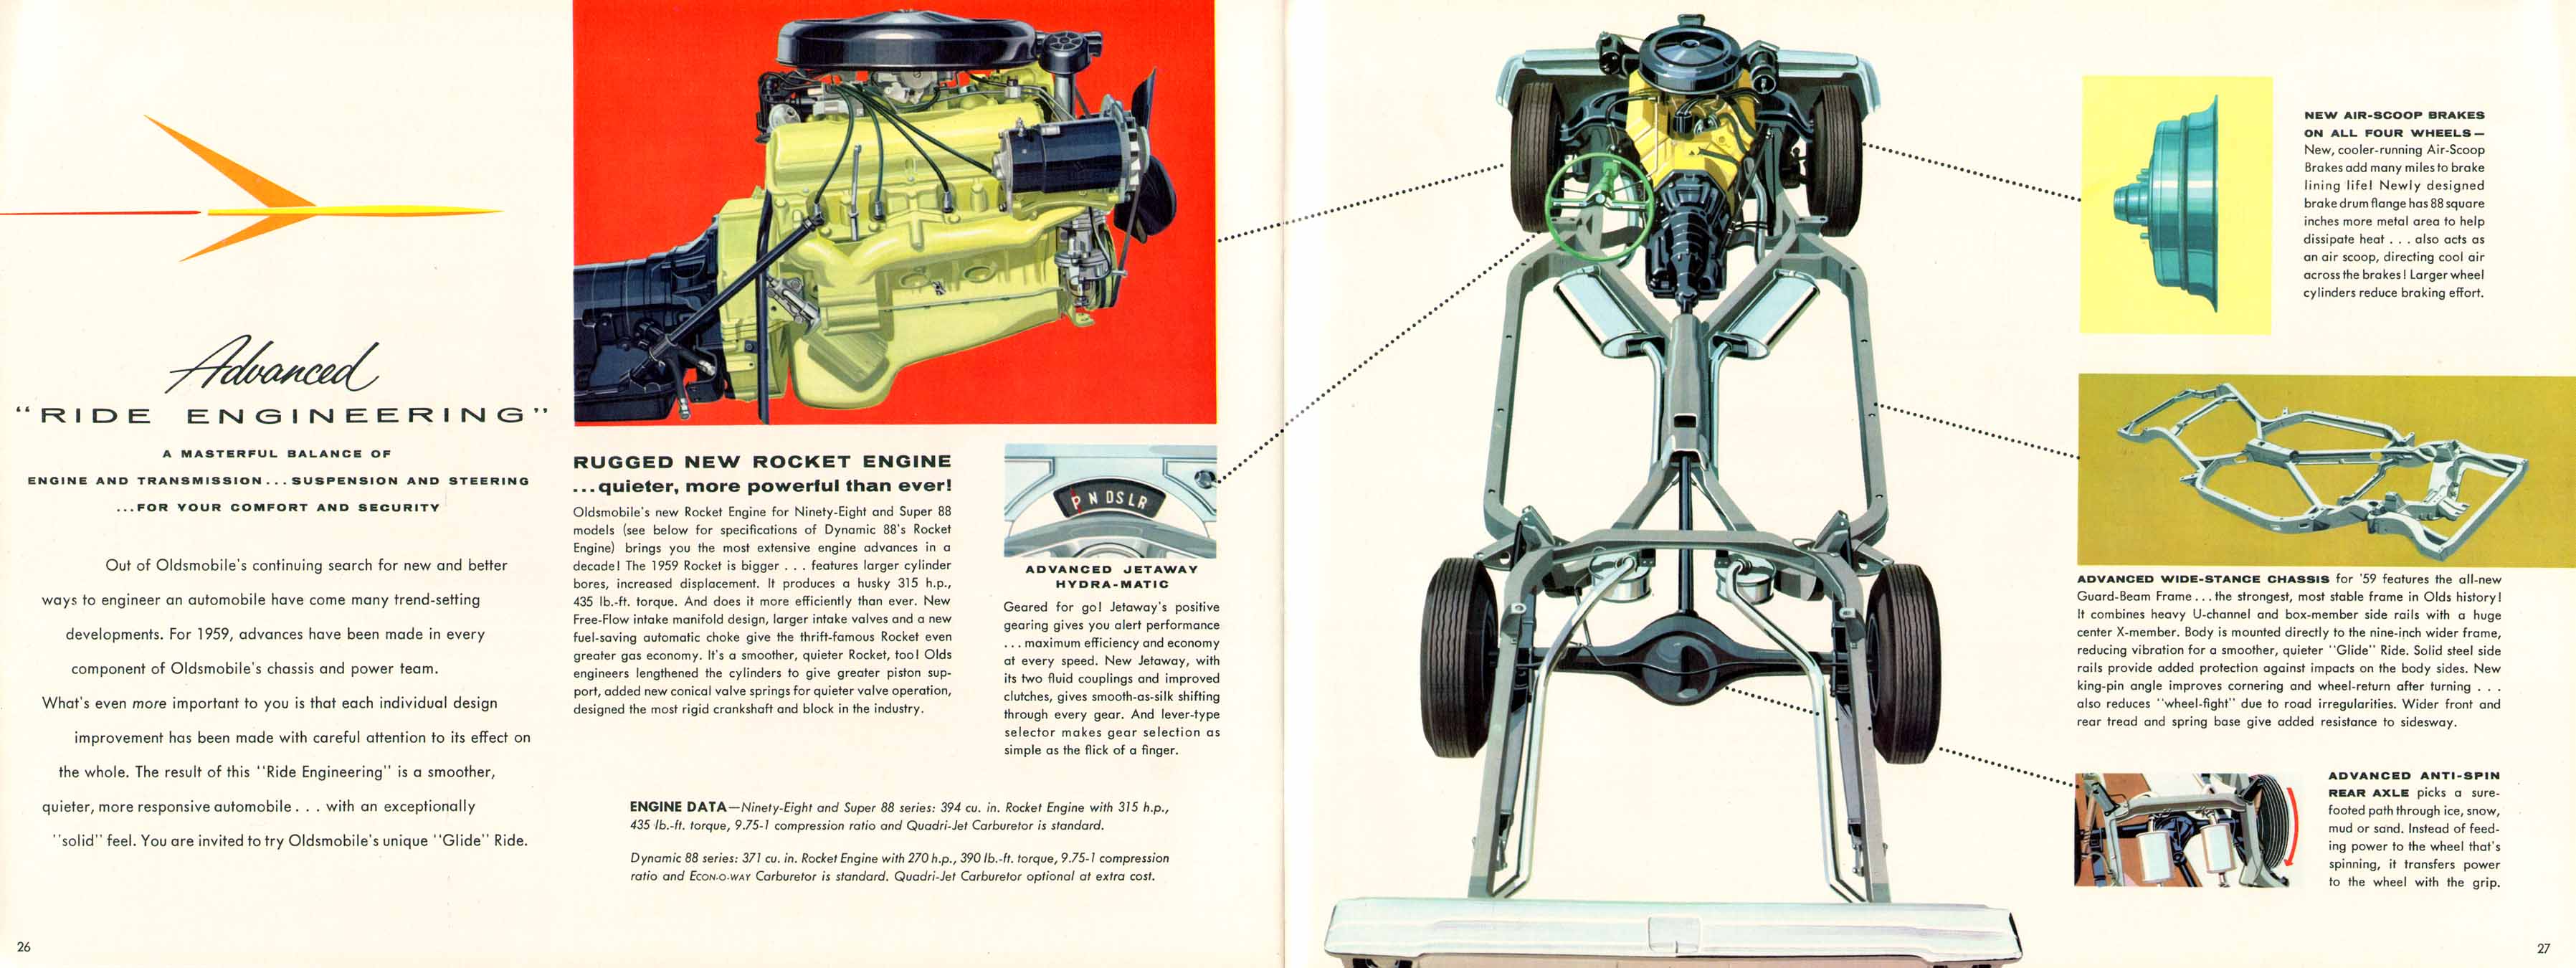 1959 Oldsmobile Motor Cars Brochure Page 1